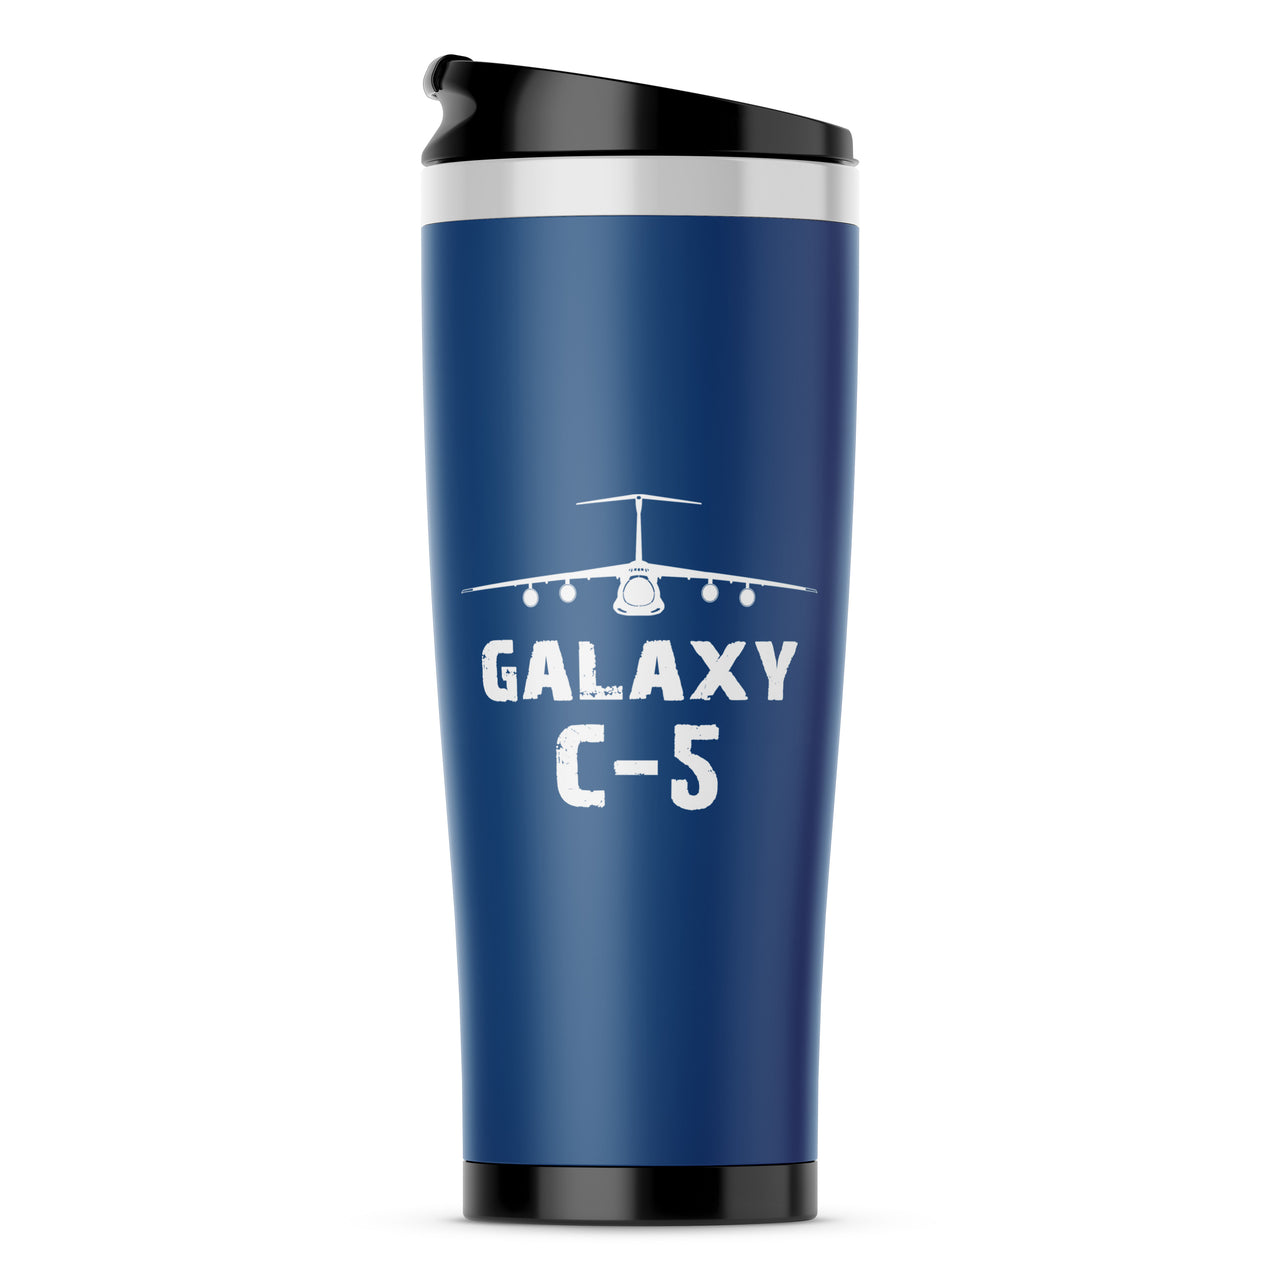 Galaxy C-5 & Plane Designed Travel Mugs